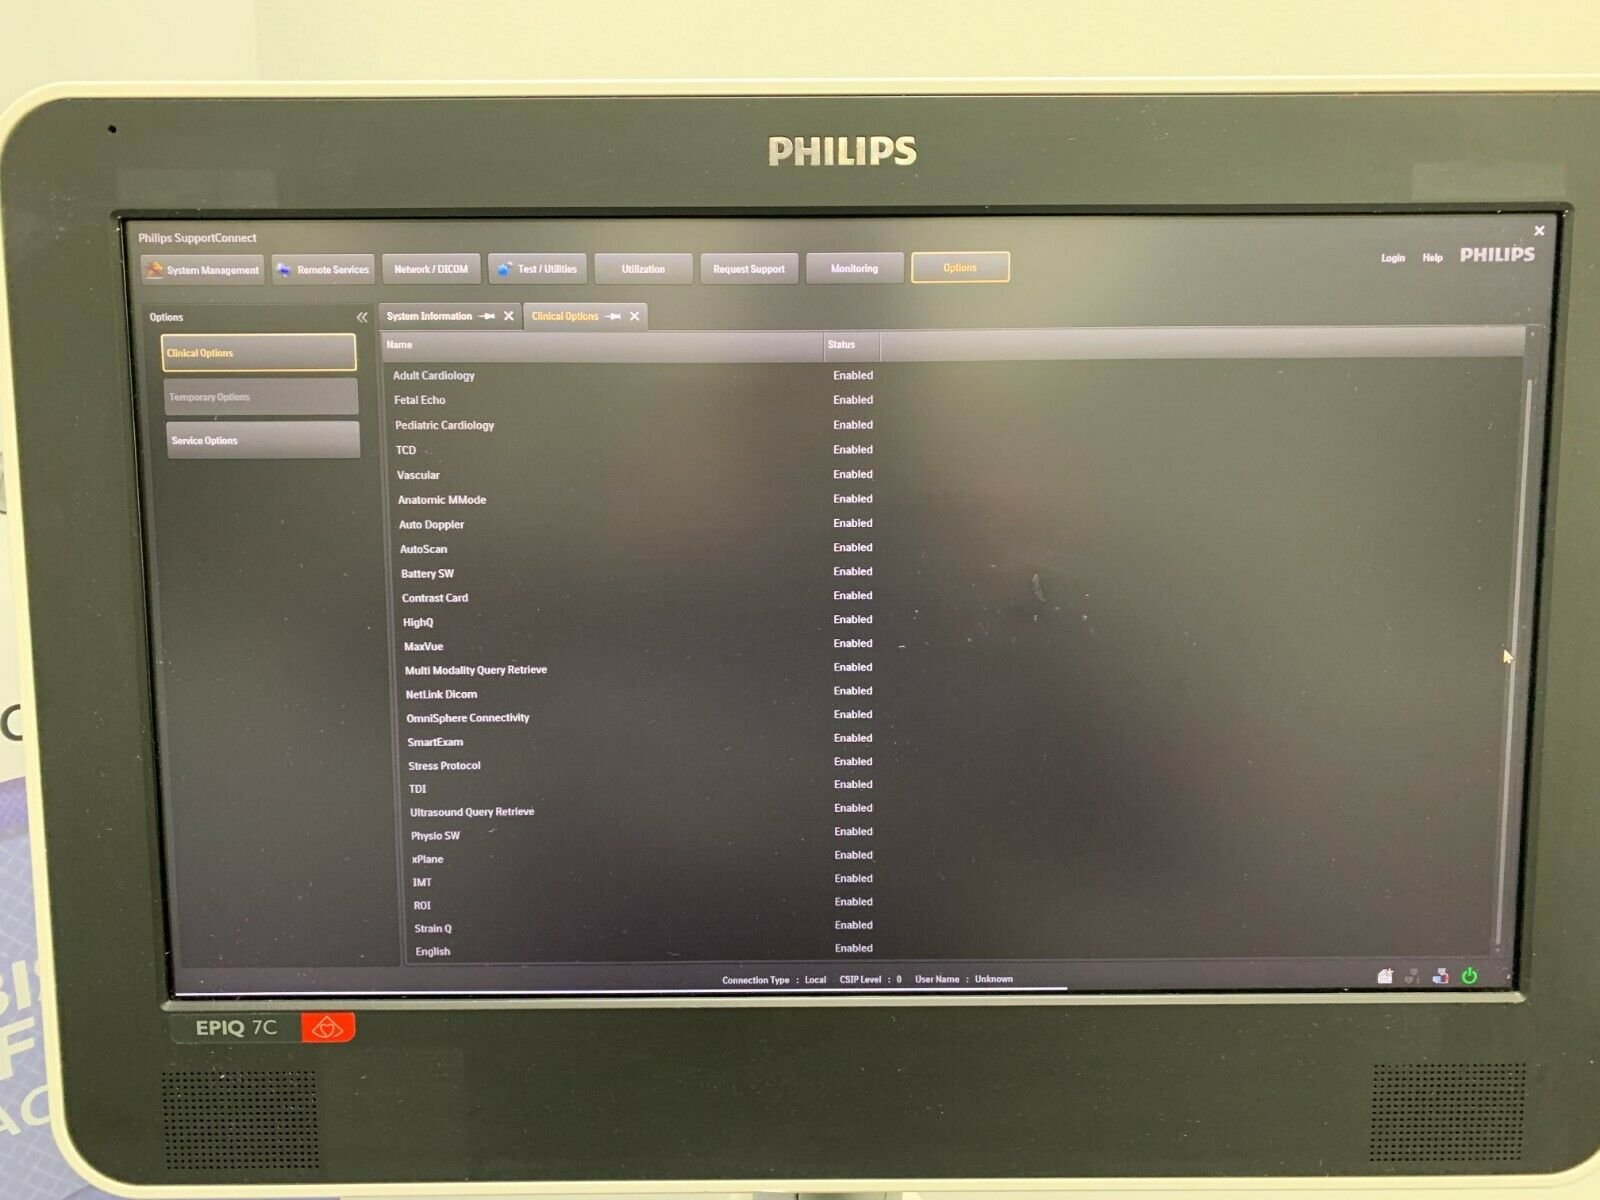 PHILIPS EPIQ 7C 4D CARIAC/VASCULAR ULTRASOUND SYSTEM XMATRIX DIAGNOSTIC ULTRASOUND MACHINES FOR SALE